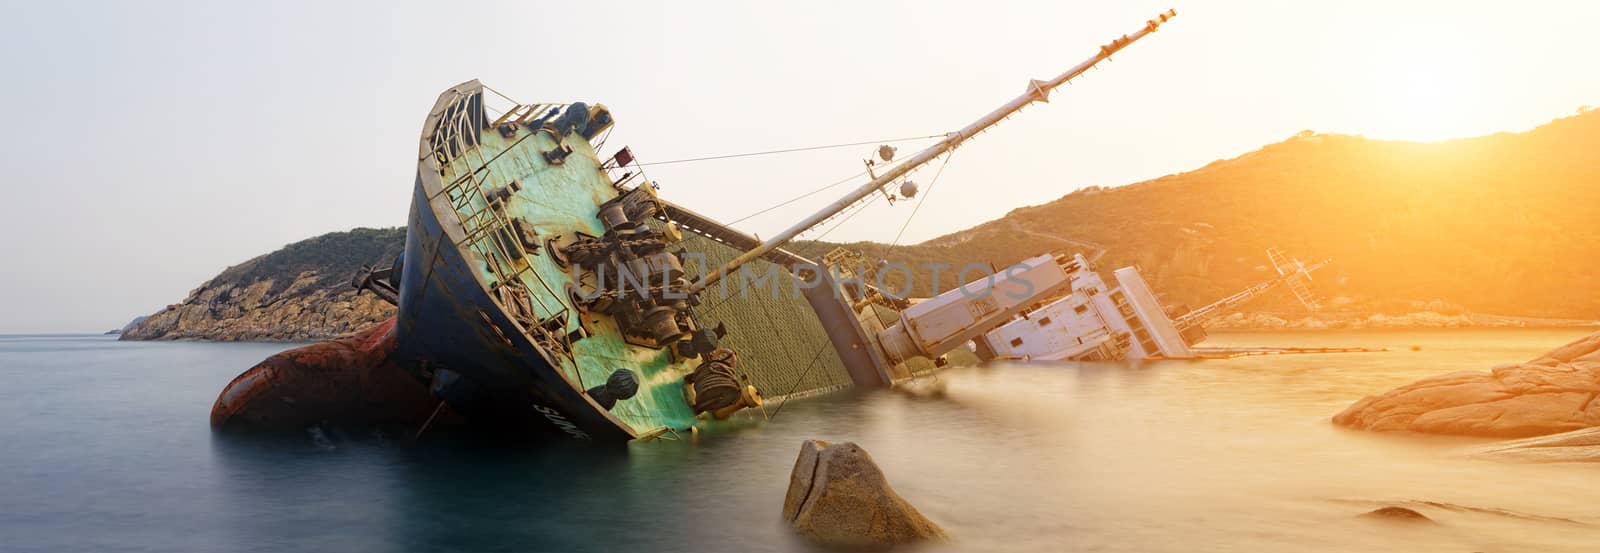 shipwreck in hong kong , seascape sunset